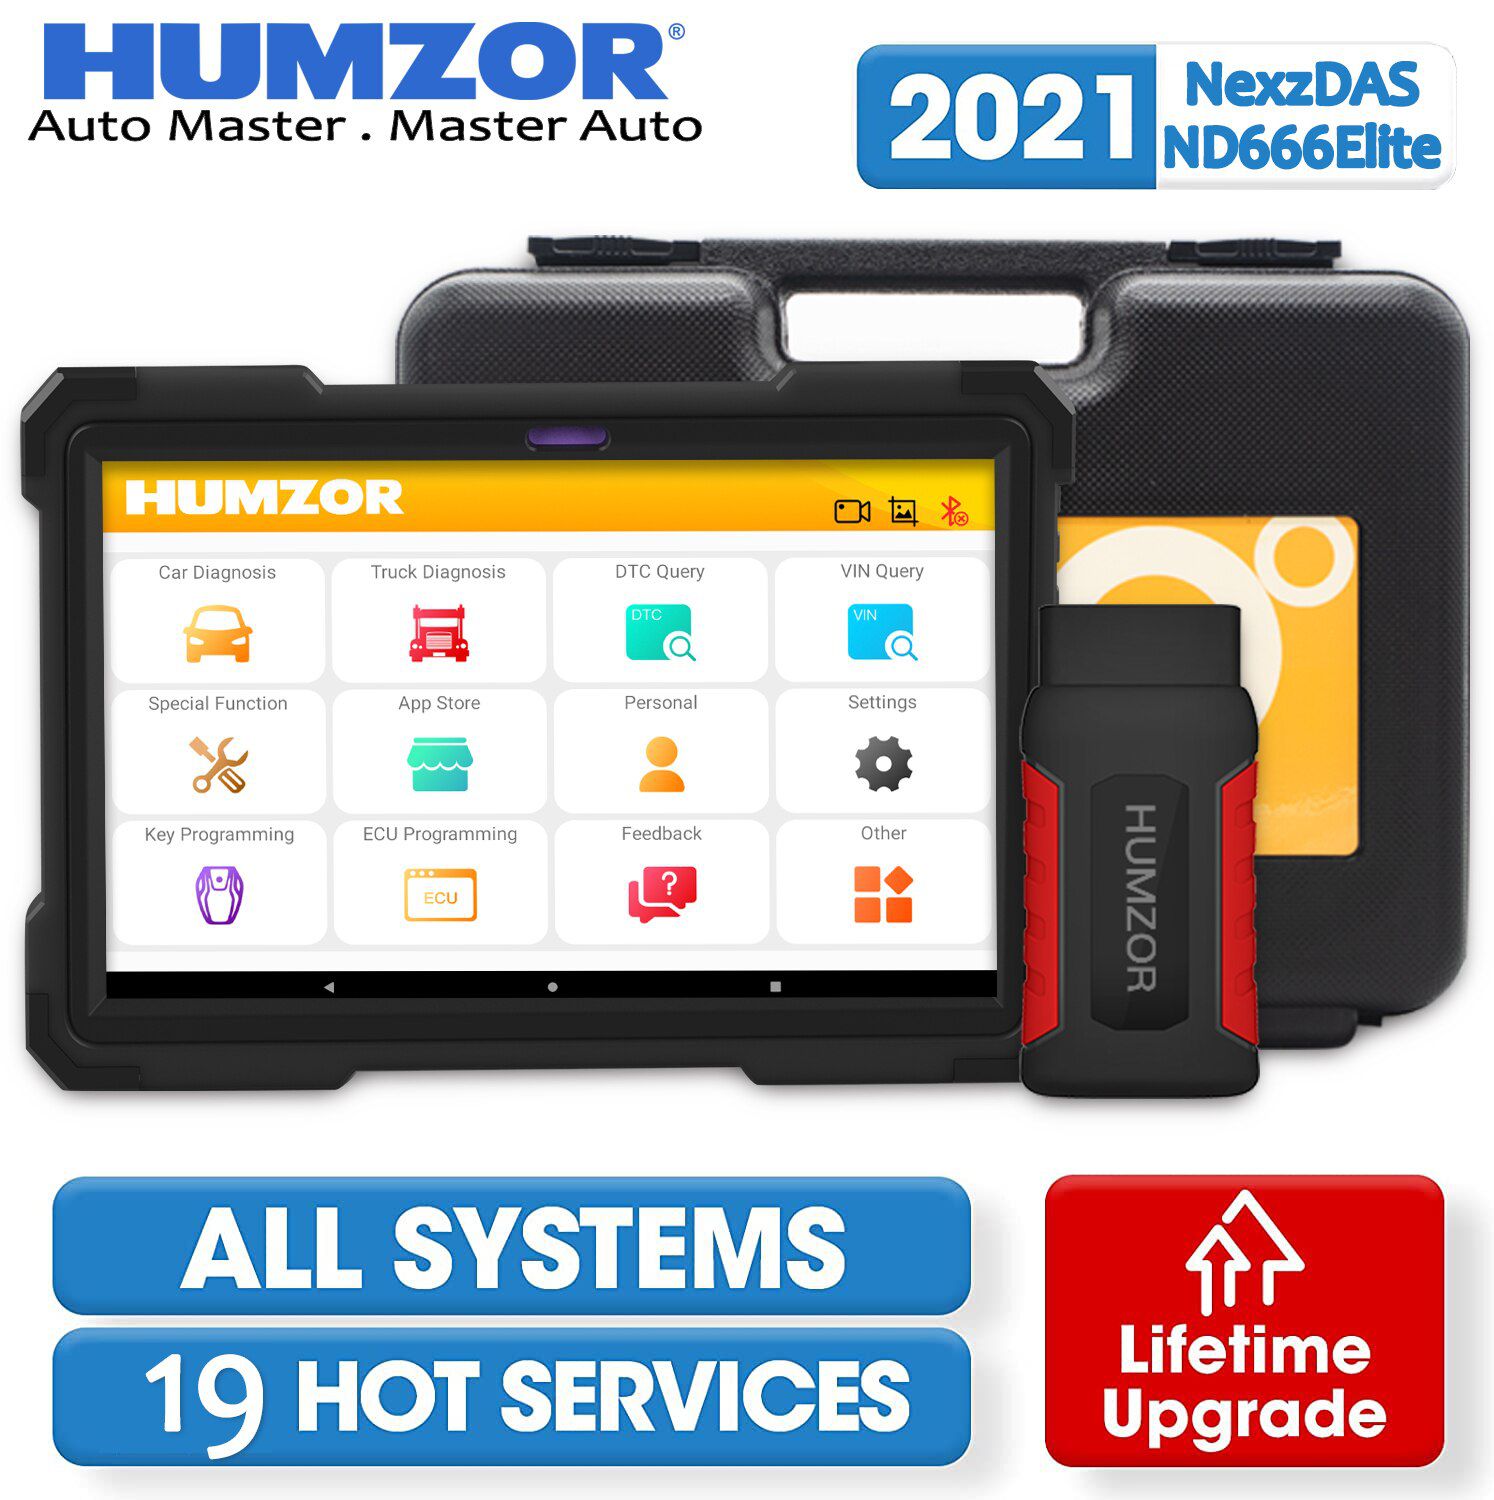 HUMZOR ND666 Elite OBD2 Auto Diagnose Scanner ausgerüstet mit 19 Wartungsfunktionen Alle System Diagnose